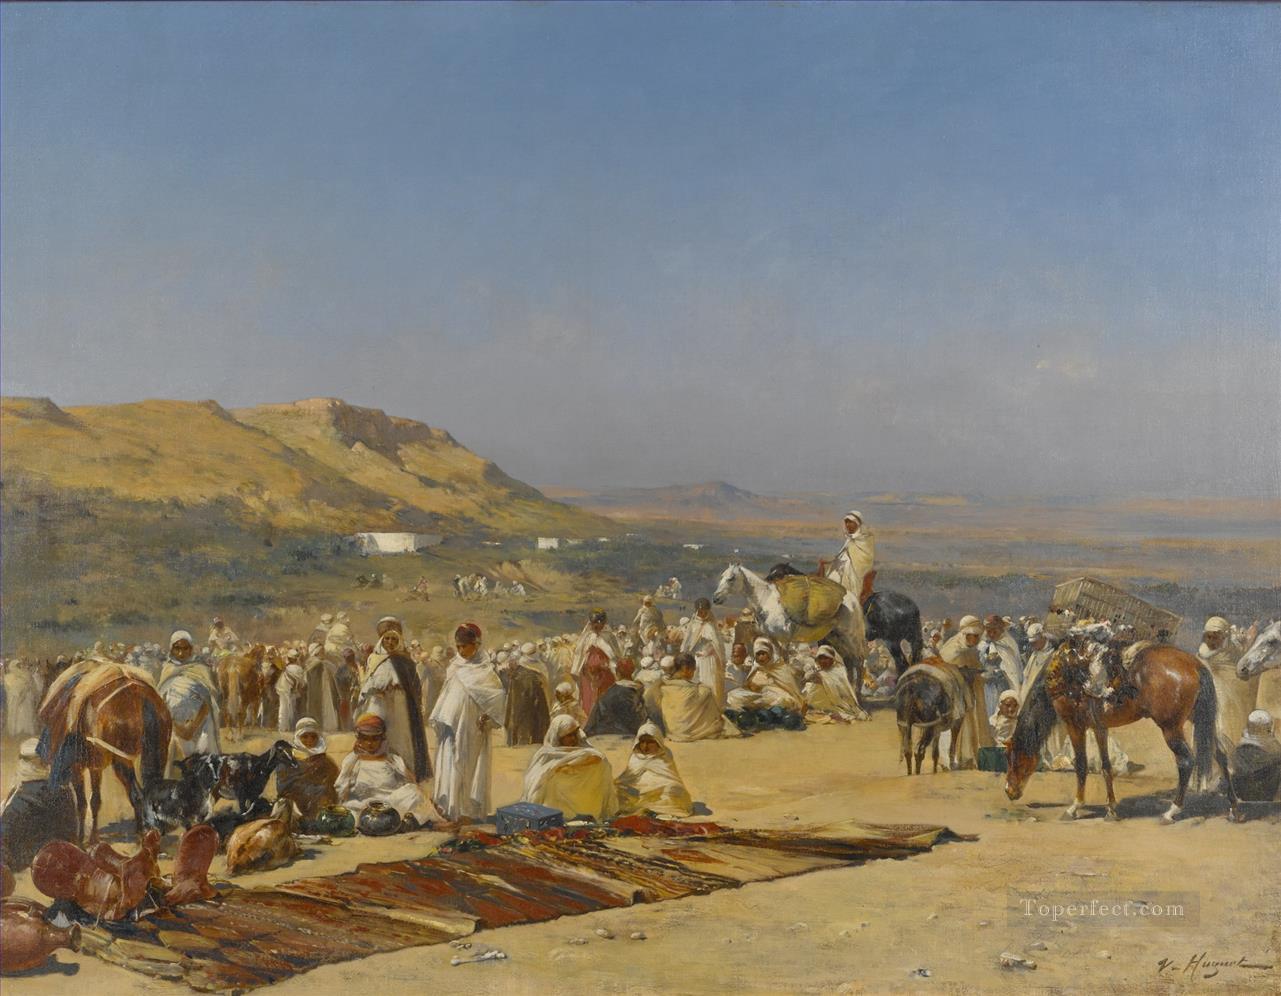 MARKET IN THE DESERT Victor Huguet Orientalist Oil Paintings